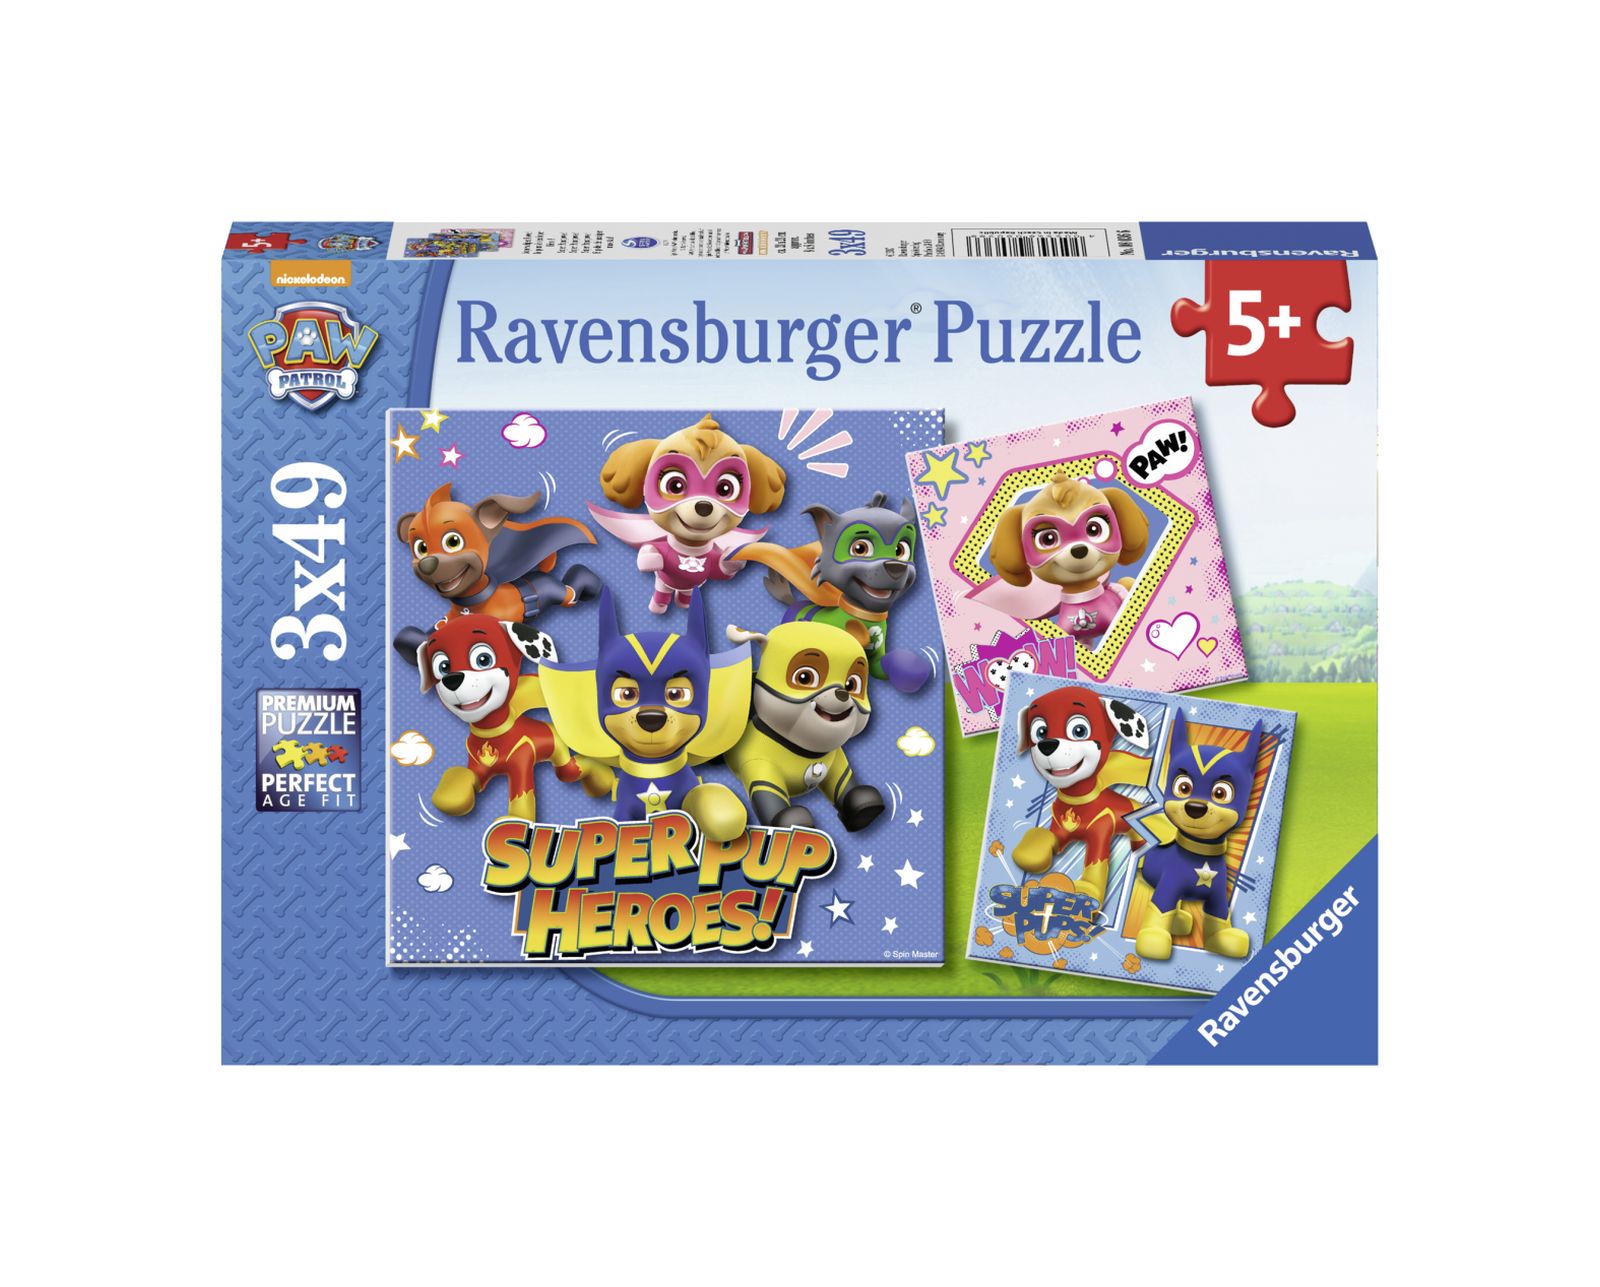 Ravensburger 3 puzzle 49 pezzi - paw patrol - RAVENSBURGER, Paw Patrol